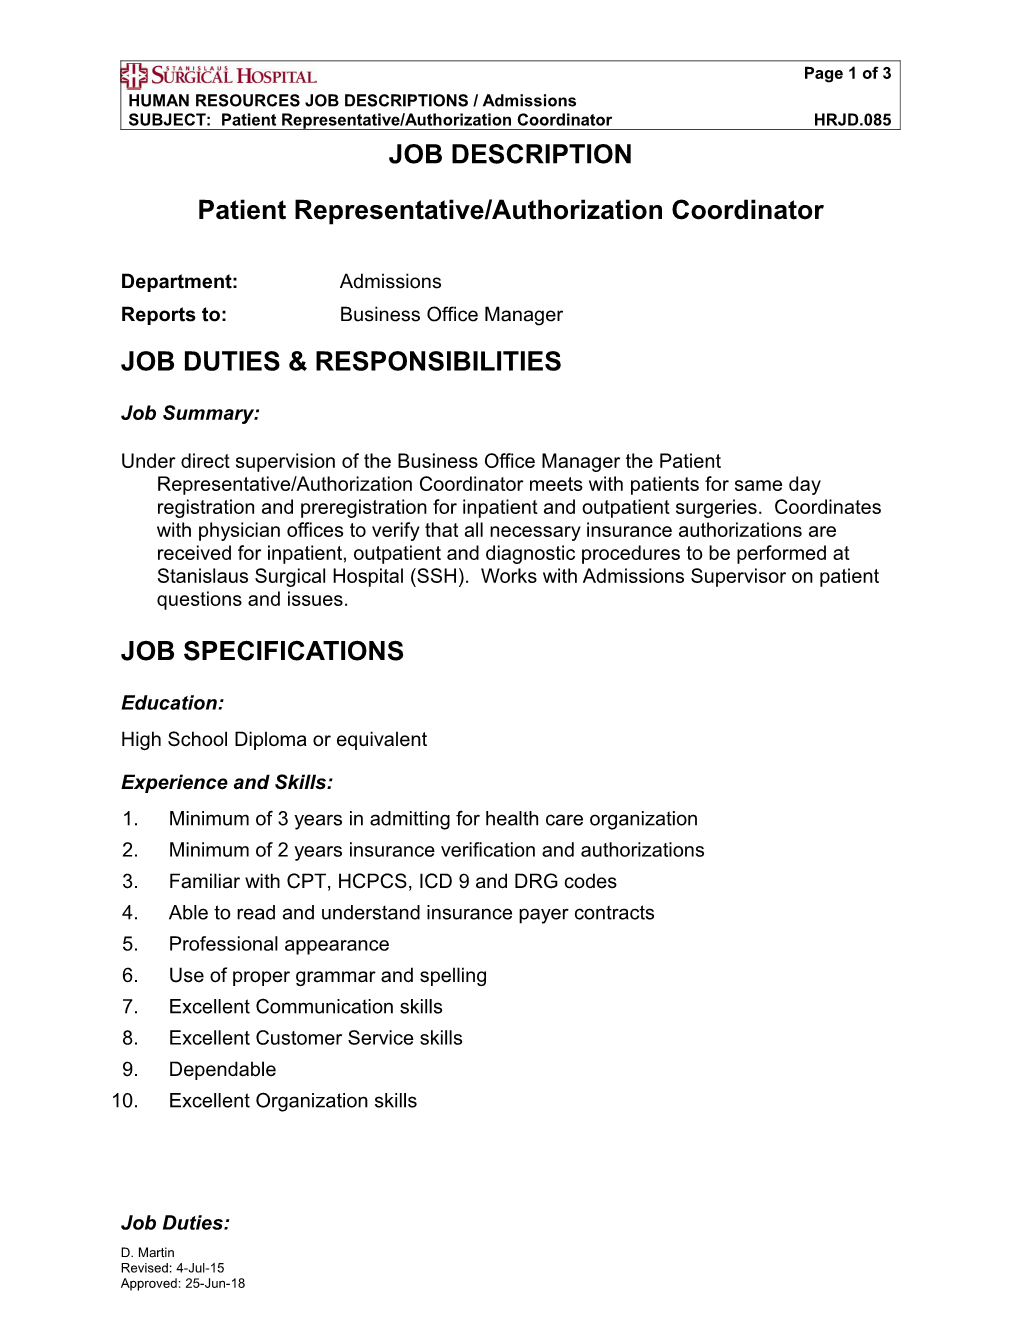 HRJD. Patient Representative Authorization Coordinator